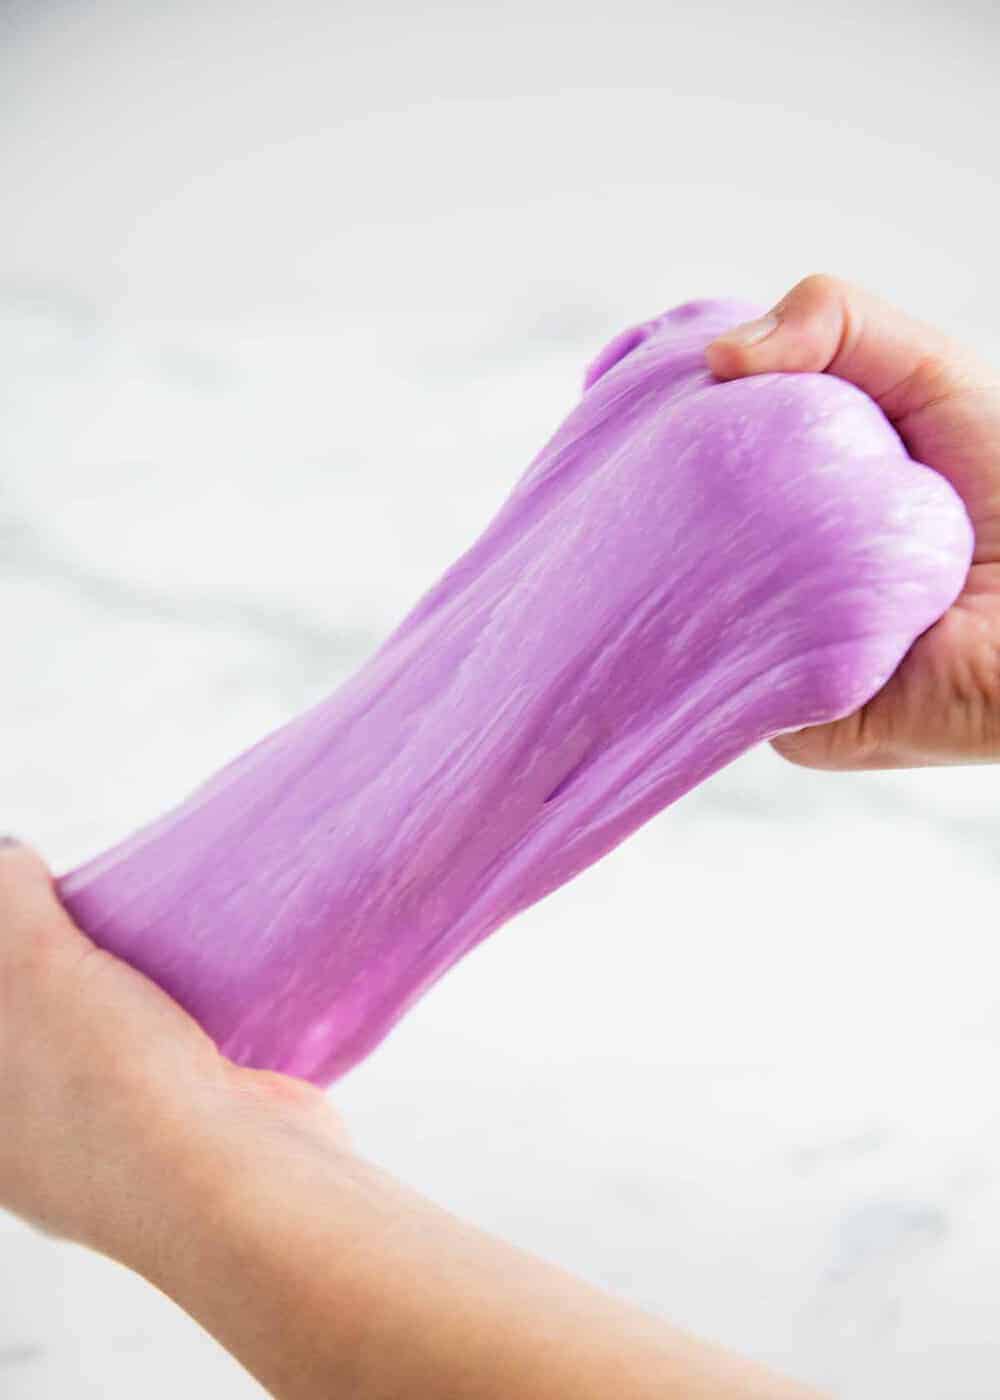 hands pulling purple slime